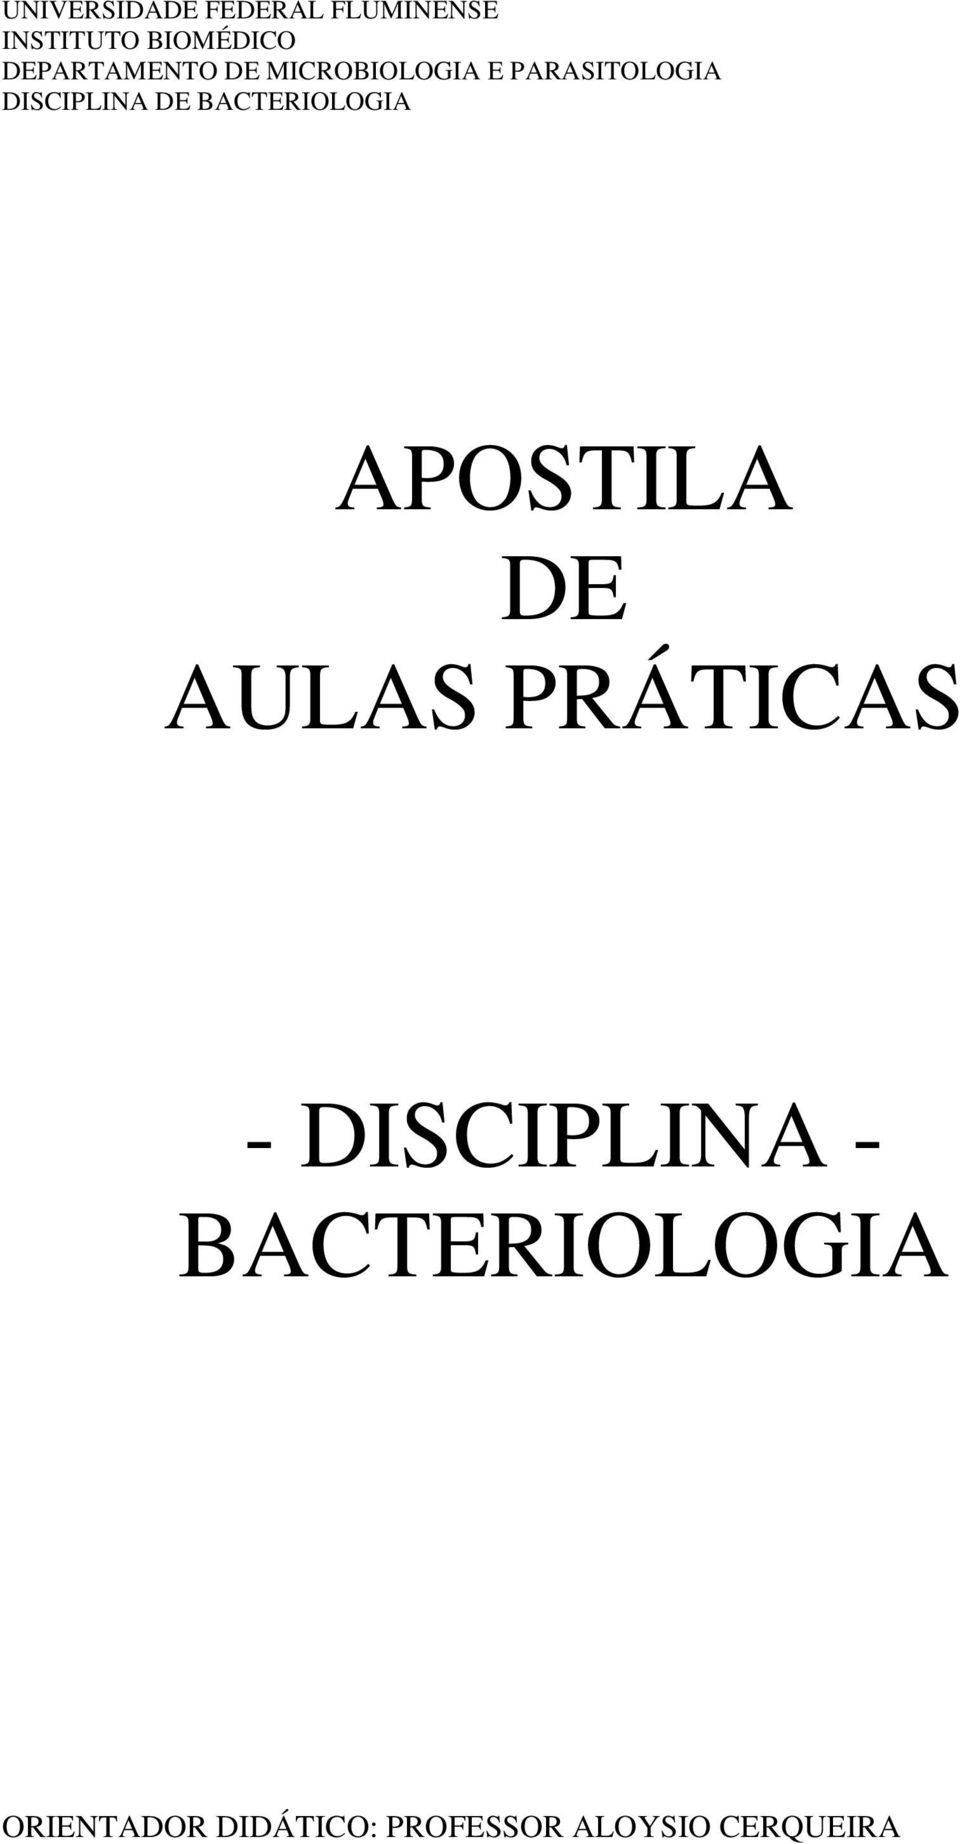 DE BACTERIOLOGIA APOSTILA DE AULAS PRÁTICAS - DISCIPLINA